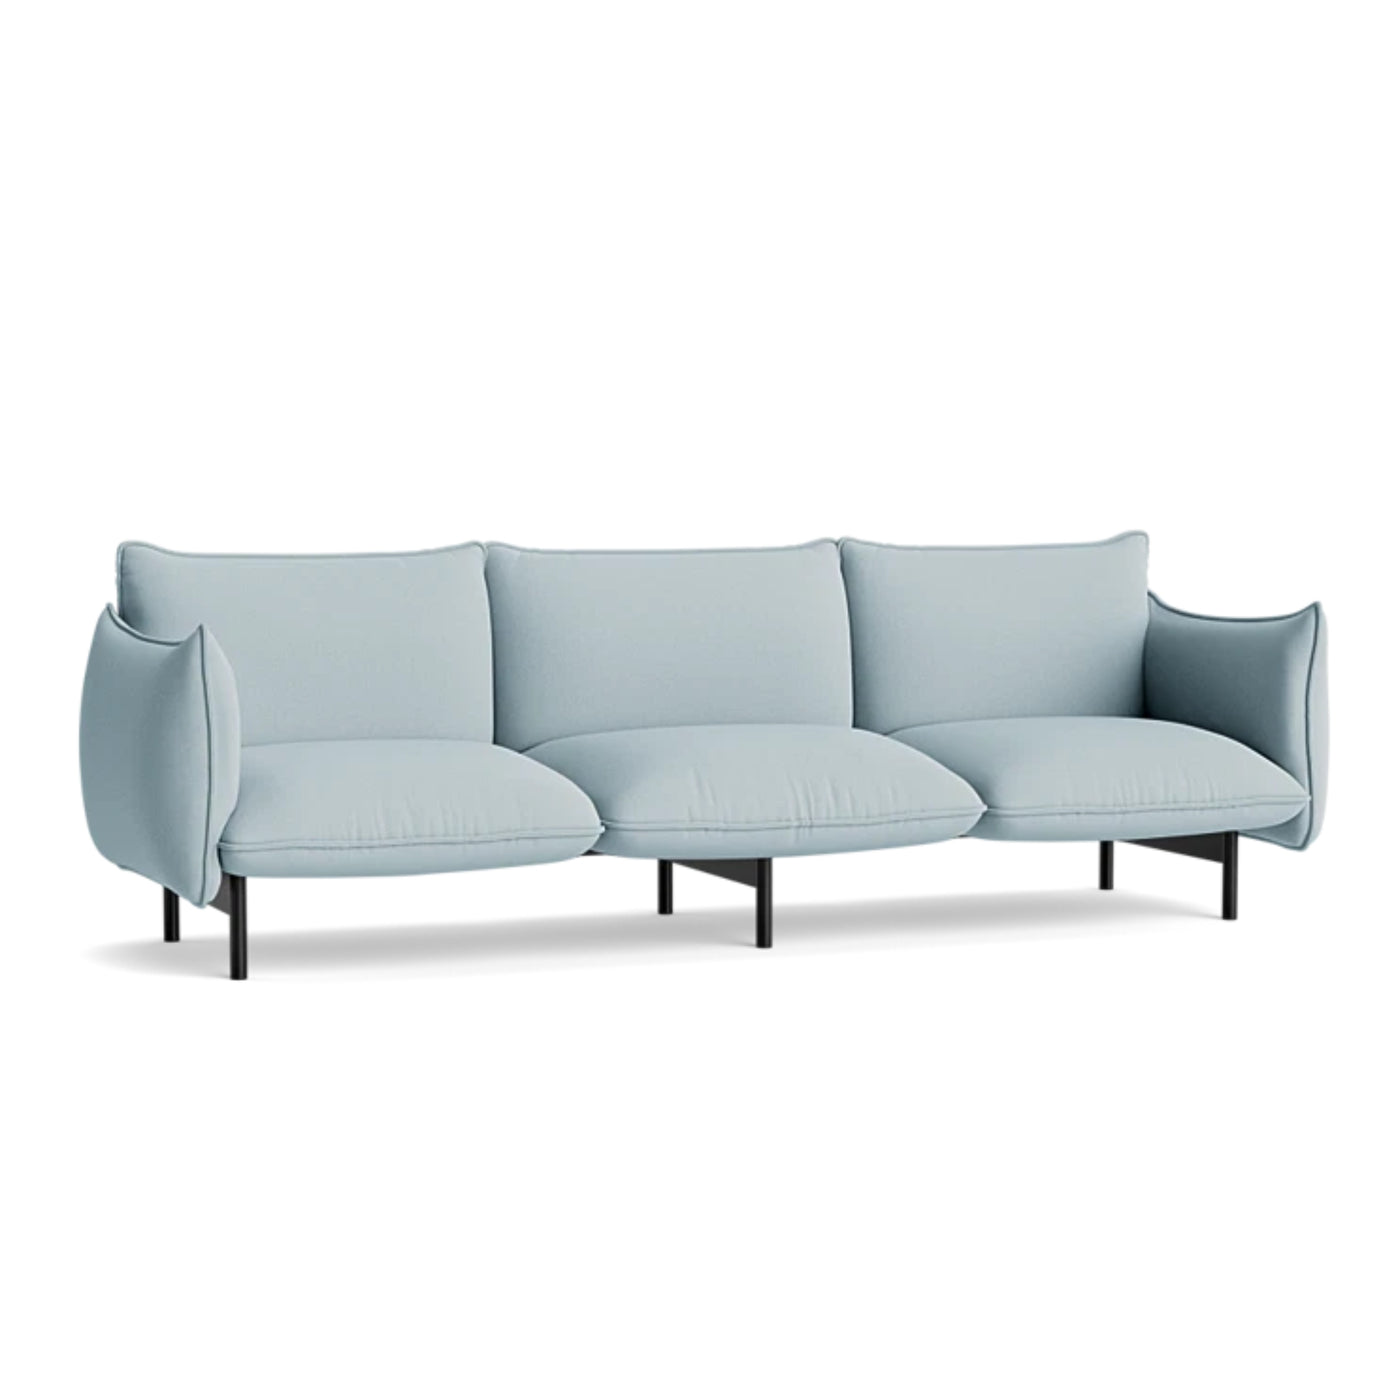 Normann Copenhagen Ark 3 Seater Modular Sofa at someday designs. #colour_steelcut-trio-713